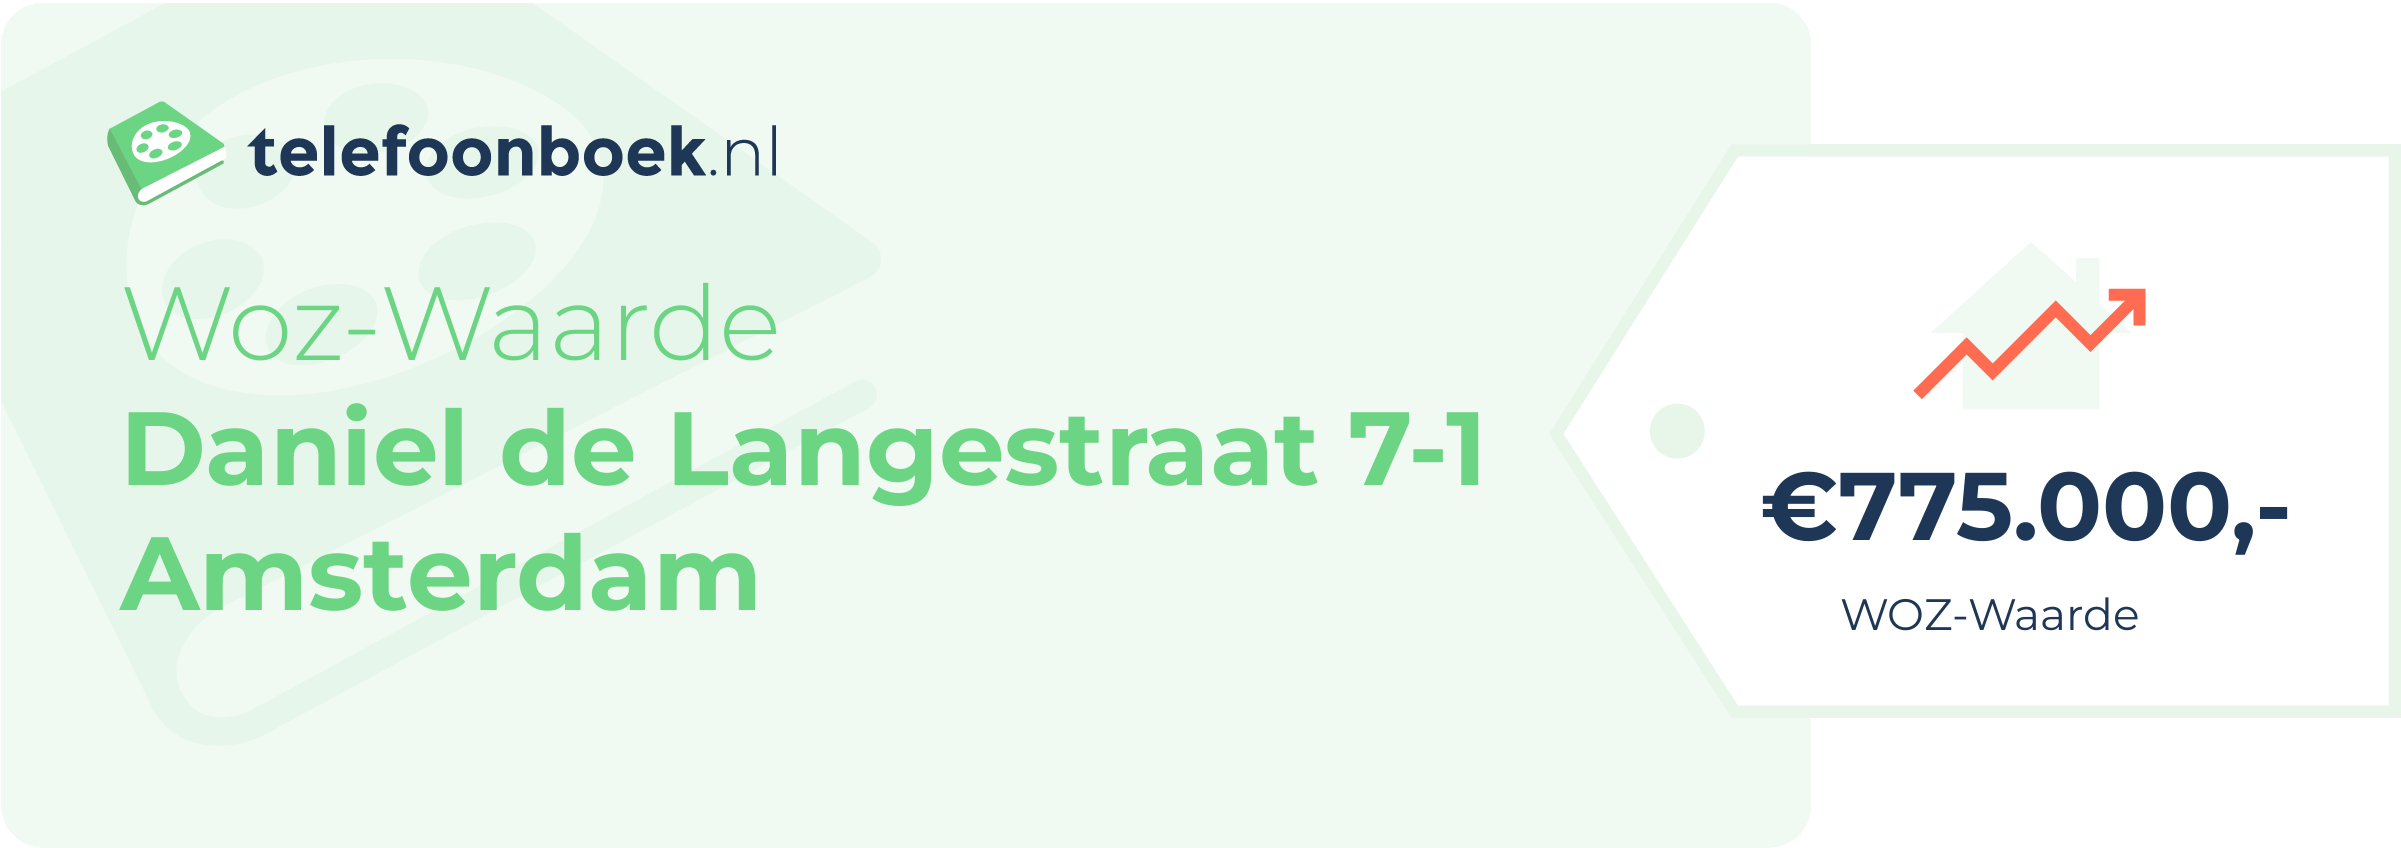 WOZ-waarde Daniel De Langestraat 7-1 Amsterdam